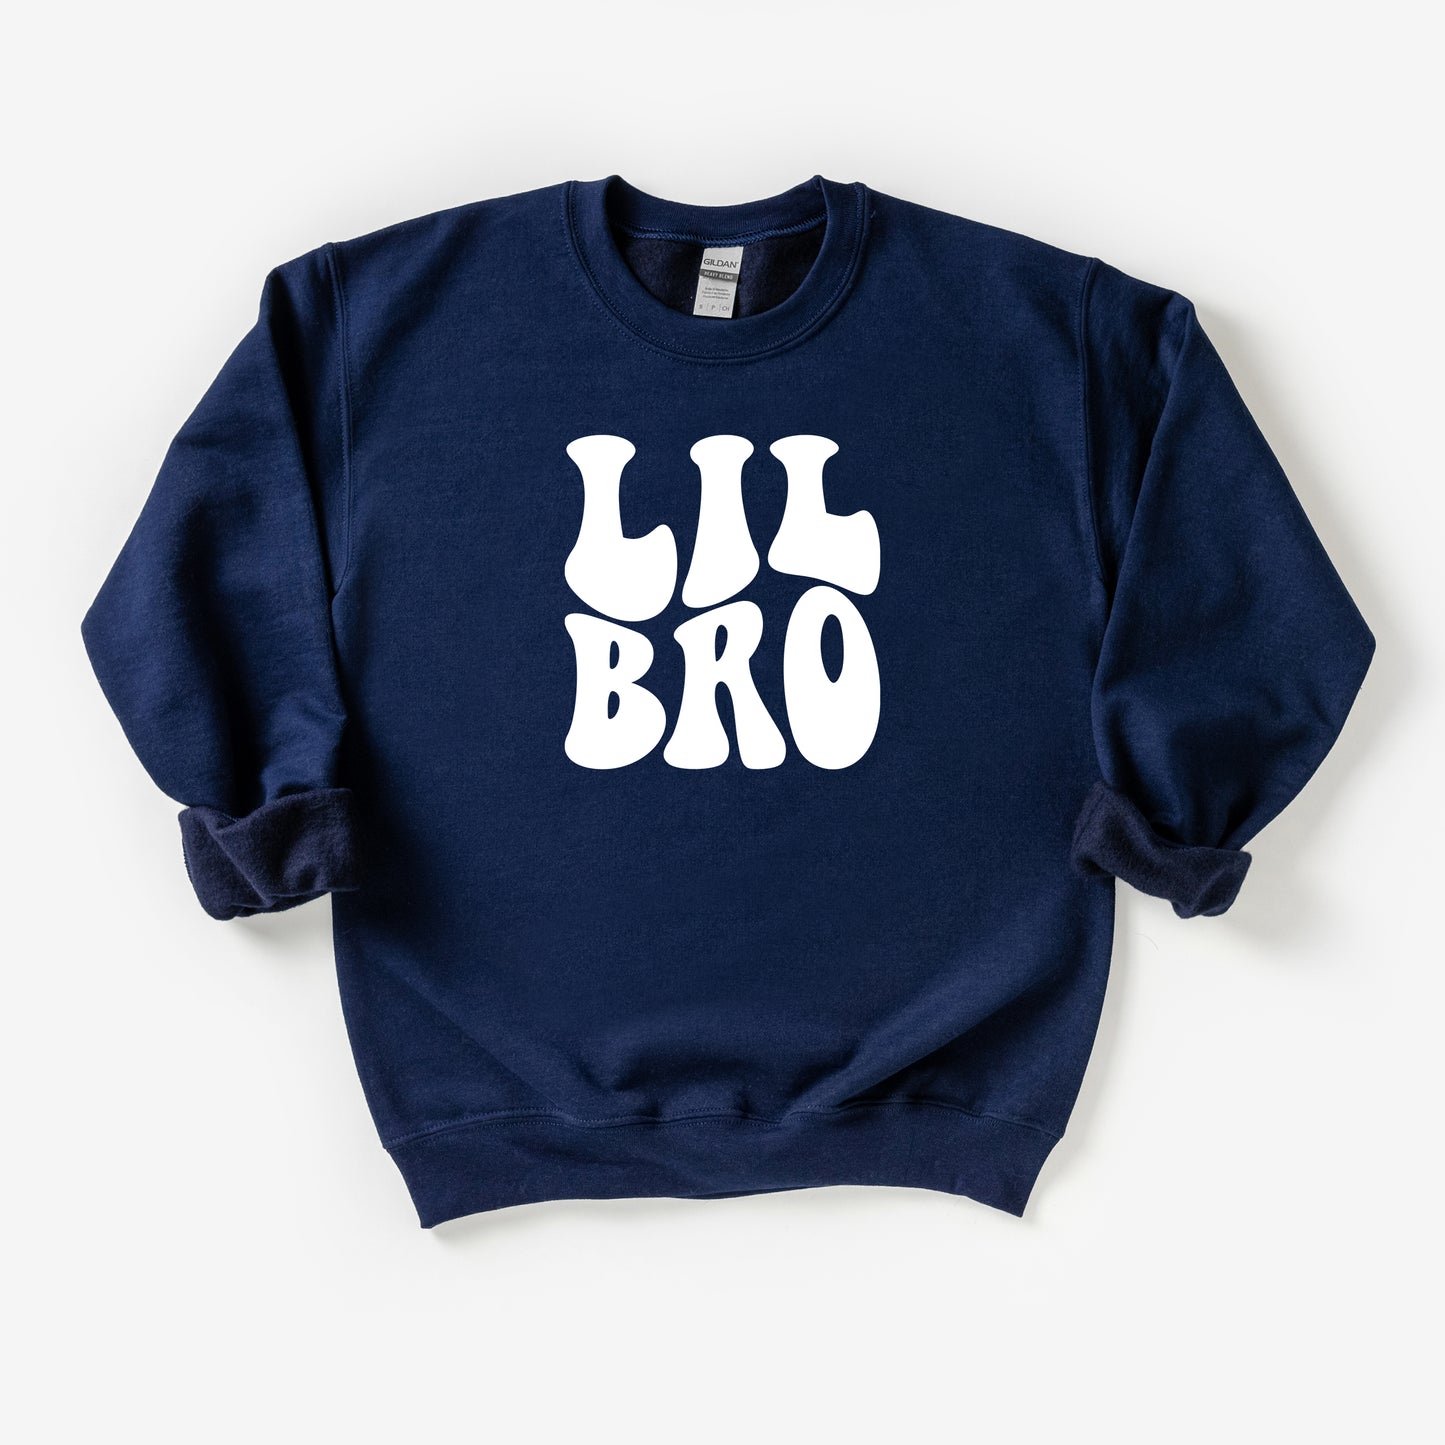 Lil Bro Wavy | Youth Sweatshirt